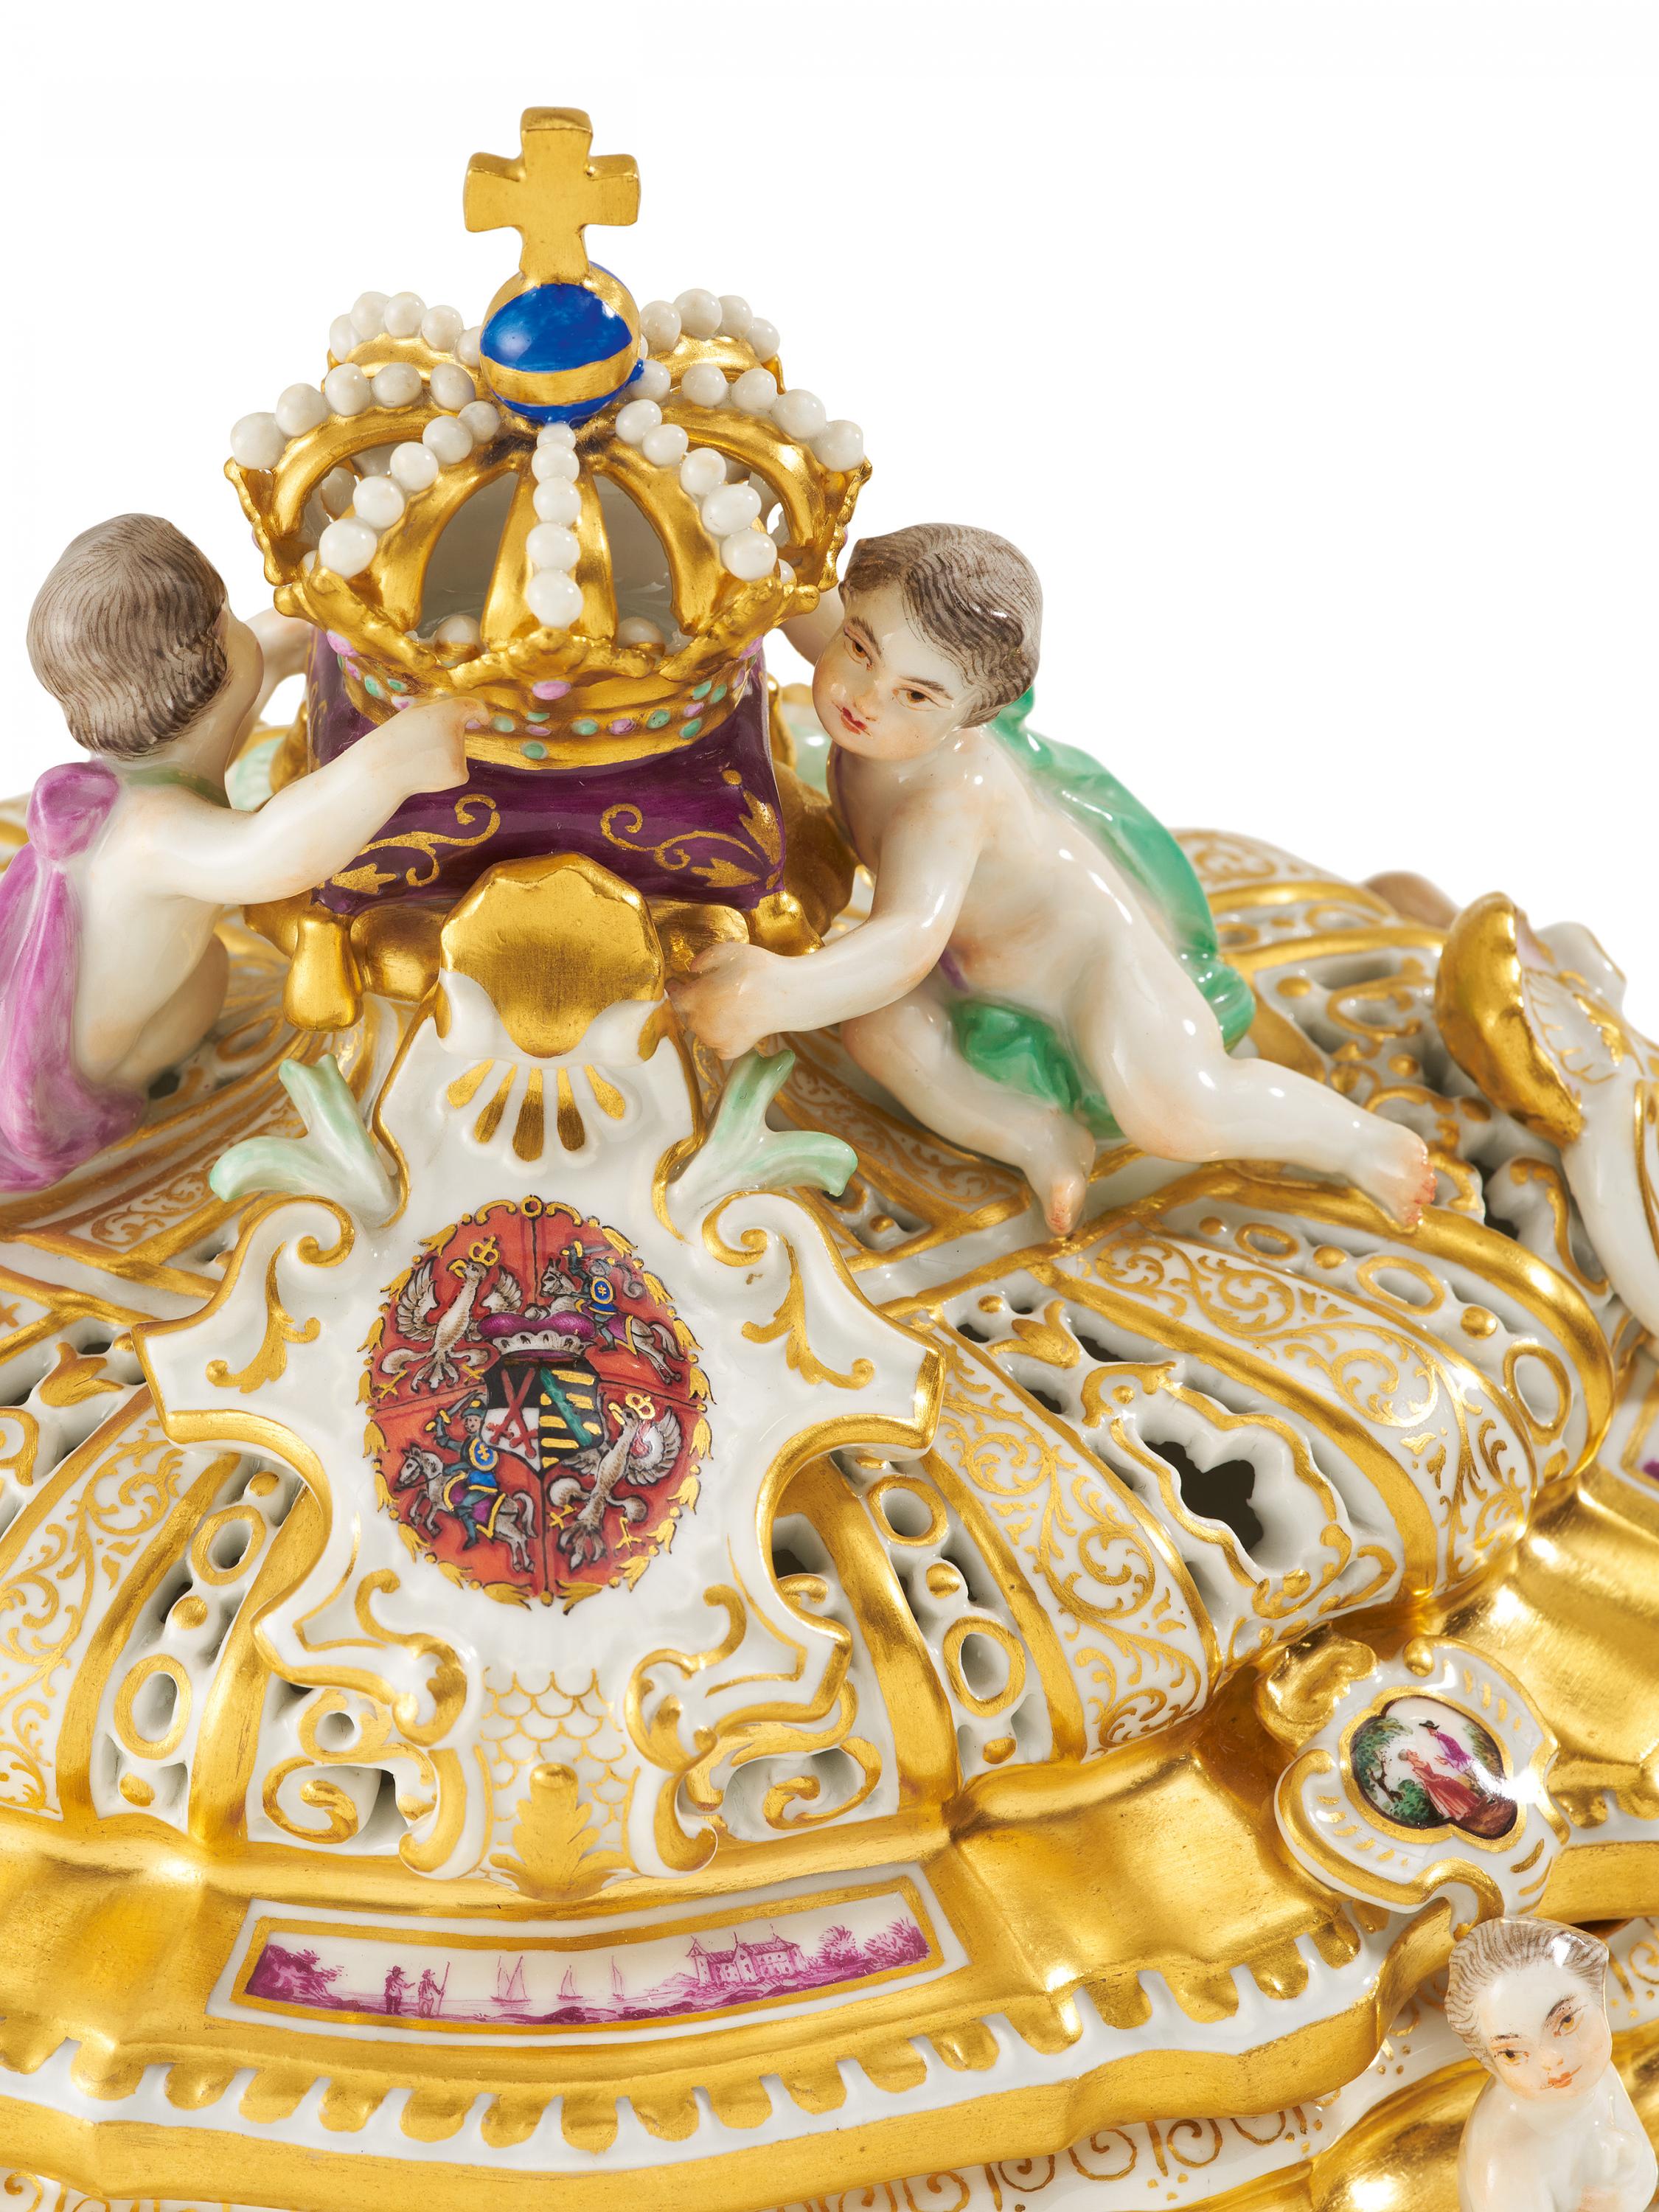  Porcelain crown tureen, so-called "Drüselkästchen" of Maria Josepha  - Image 8 of 9